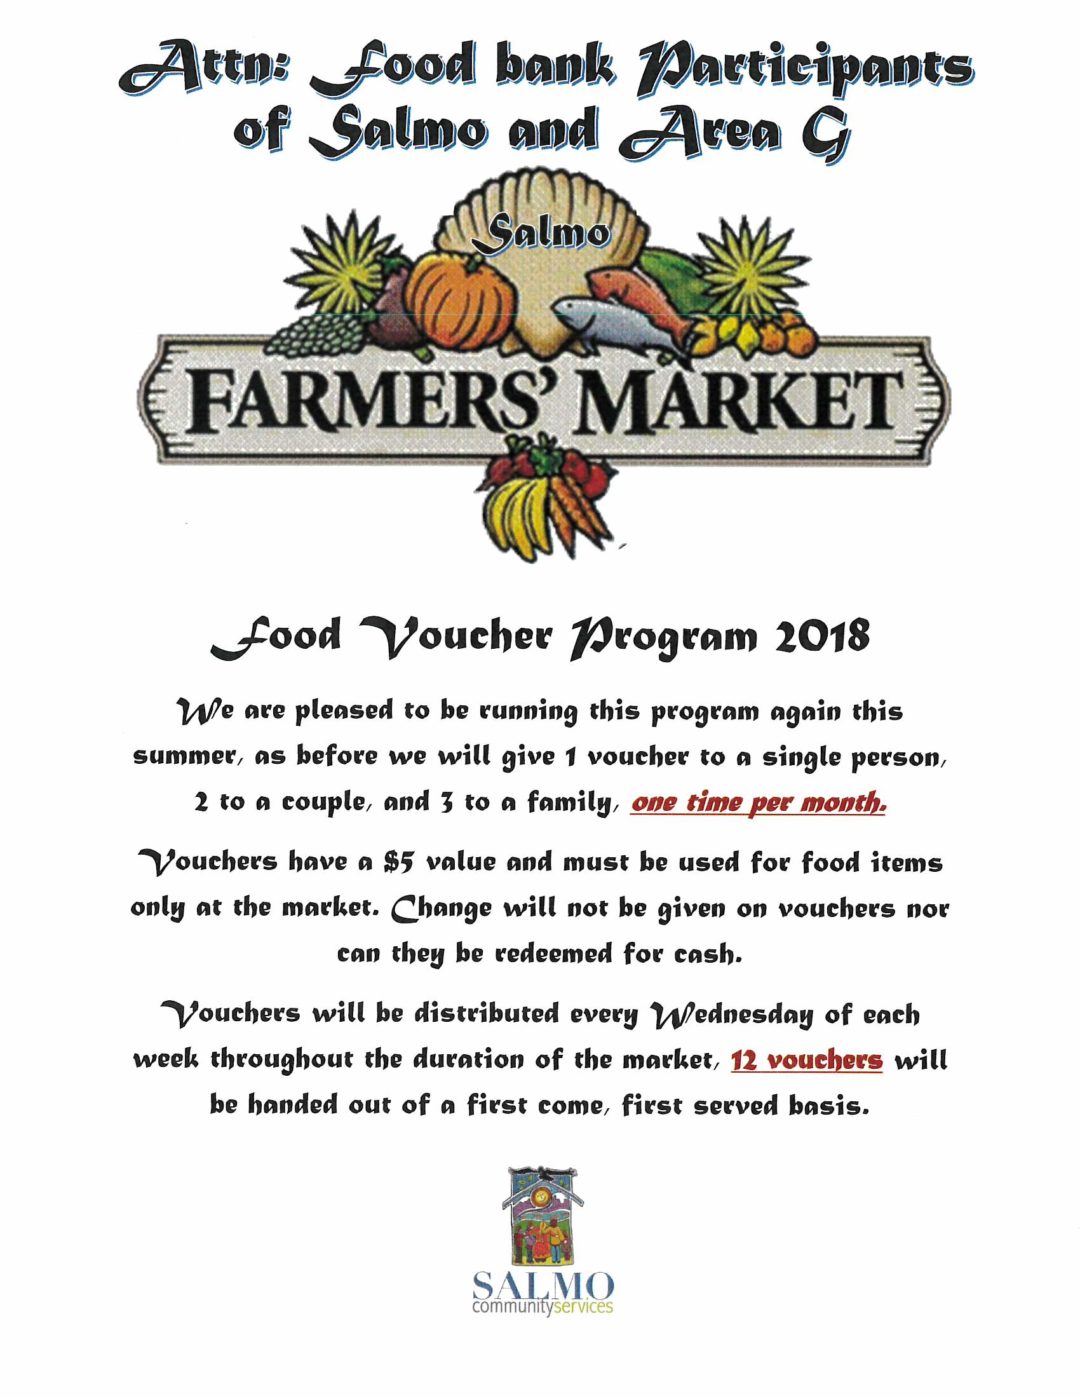 Food Bank Farmer's Market Voucher Program Salmo Community Resource